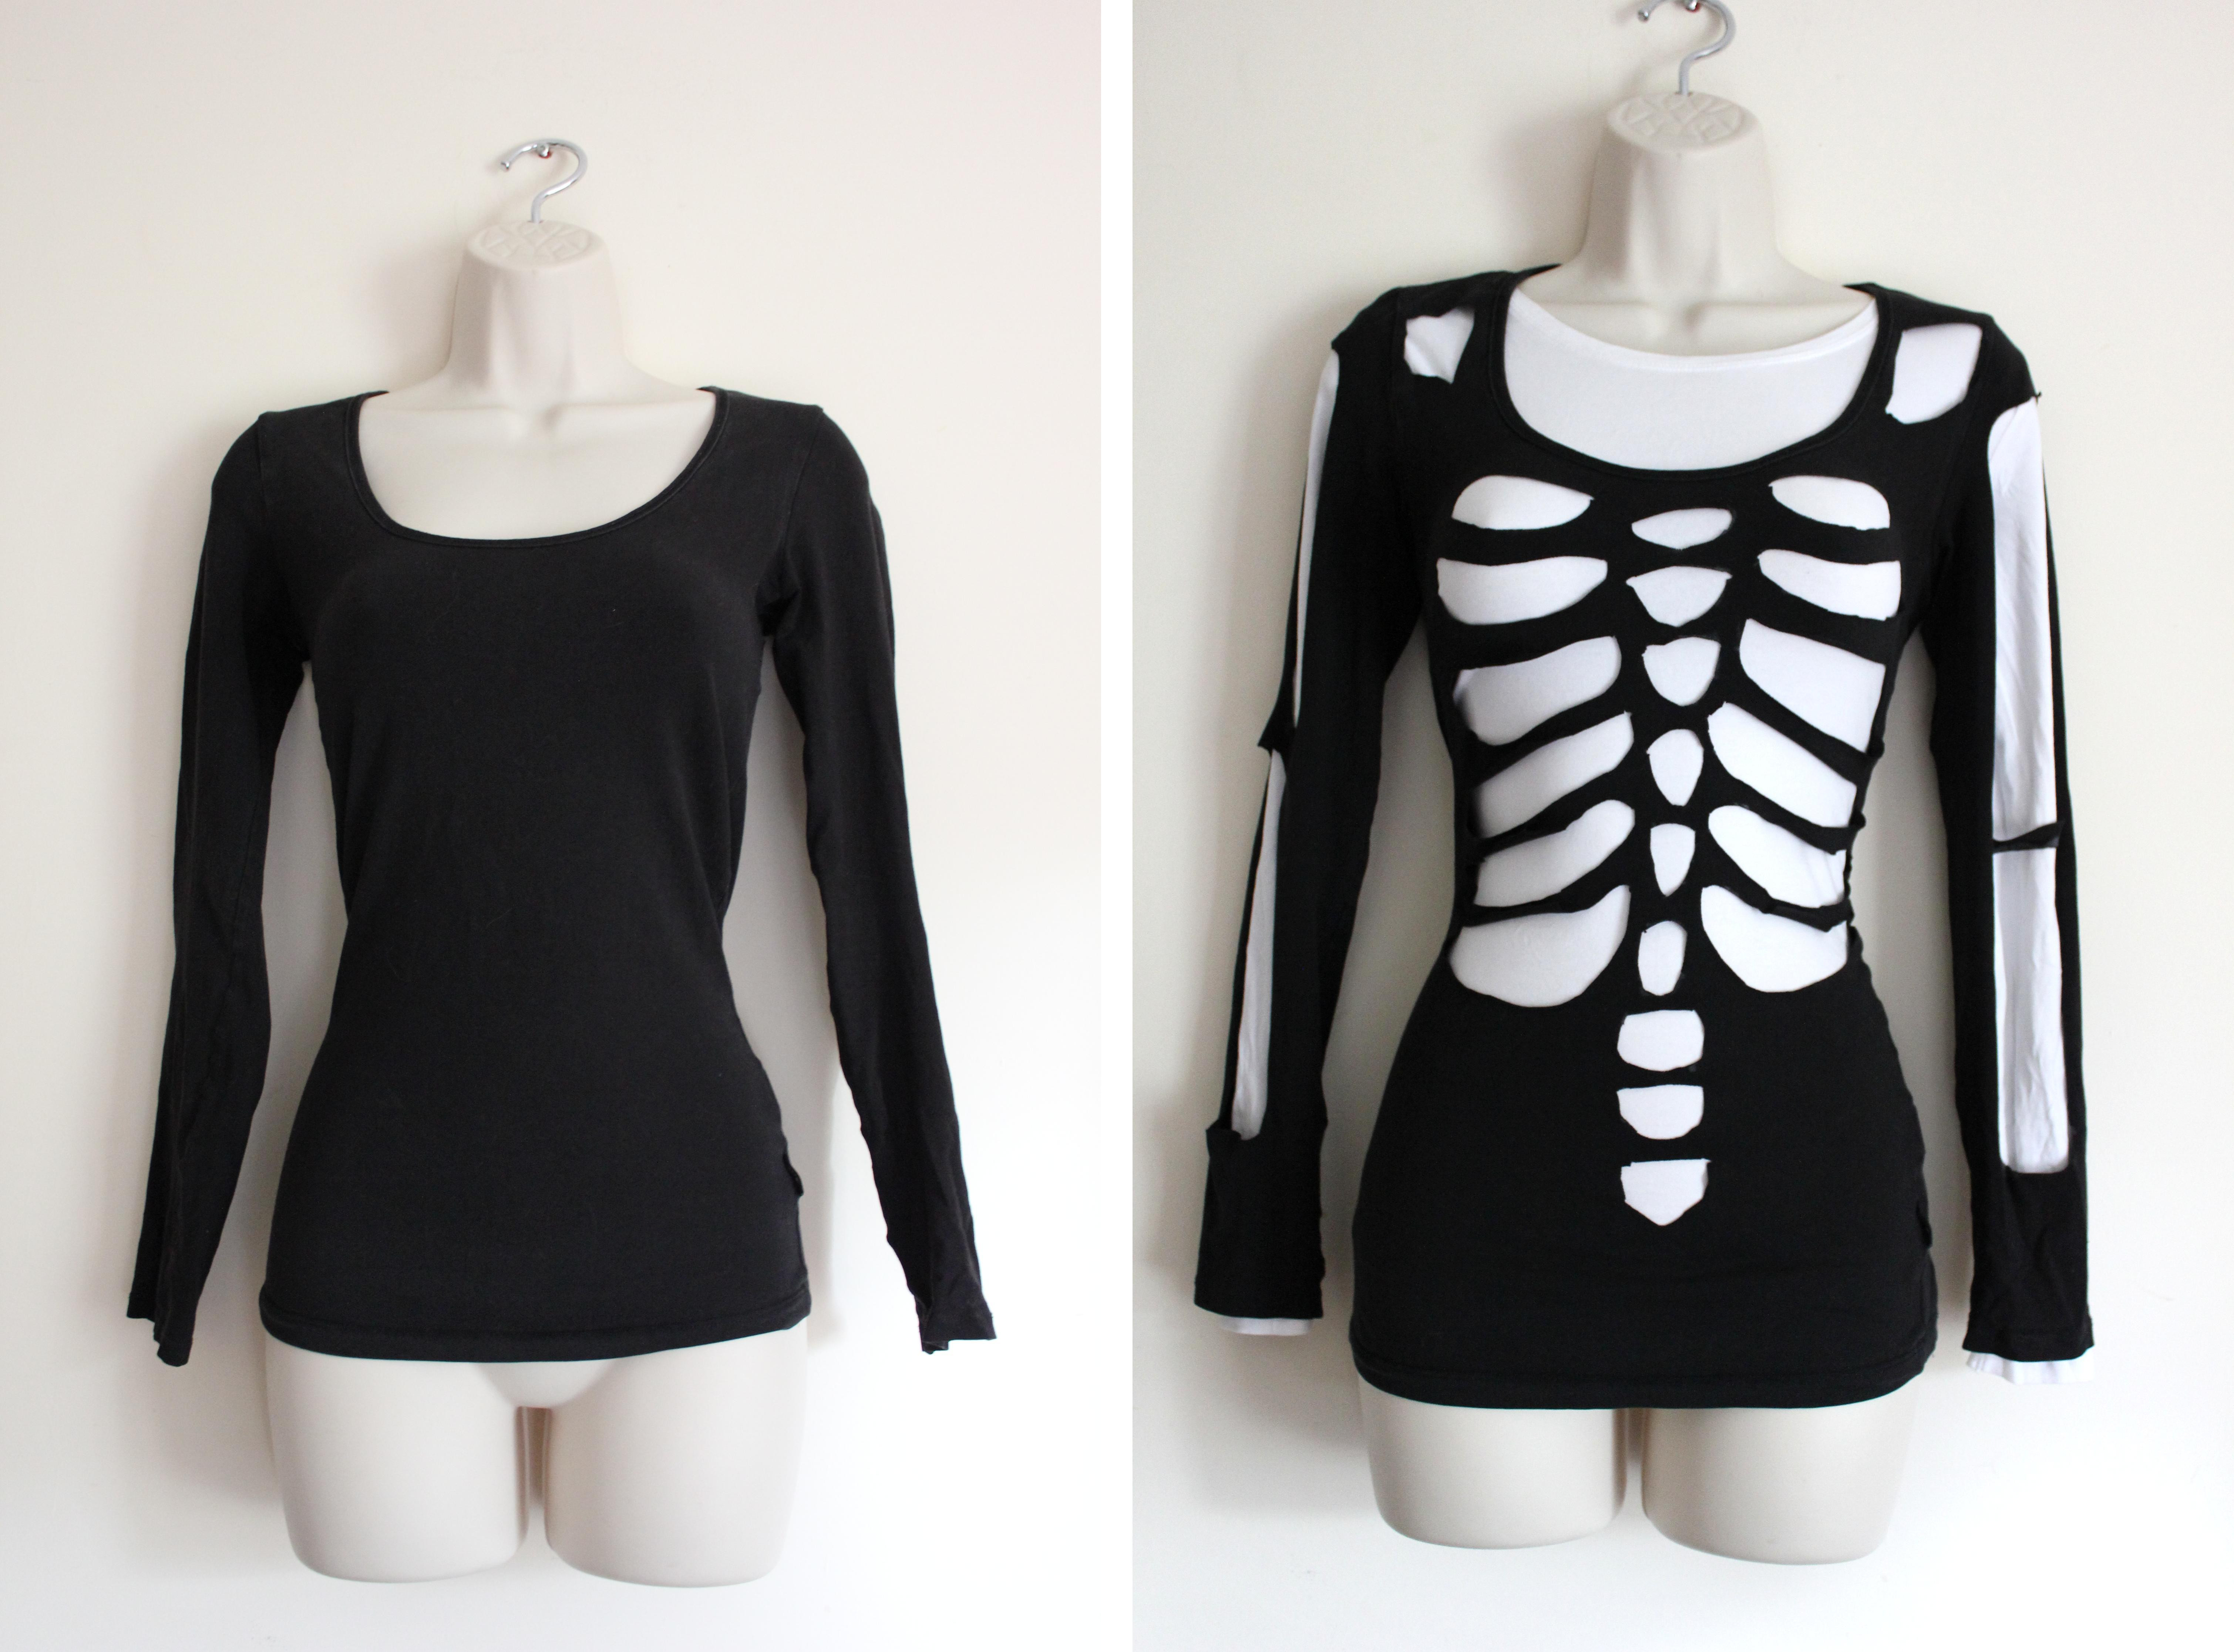 Skeleton Costume DIY
 DIY scary skeleton Halloween costume